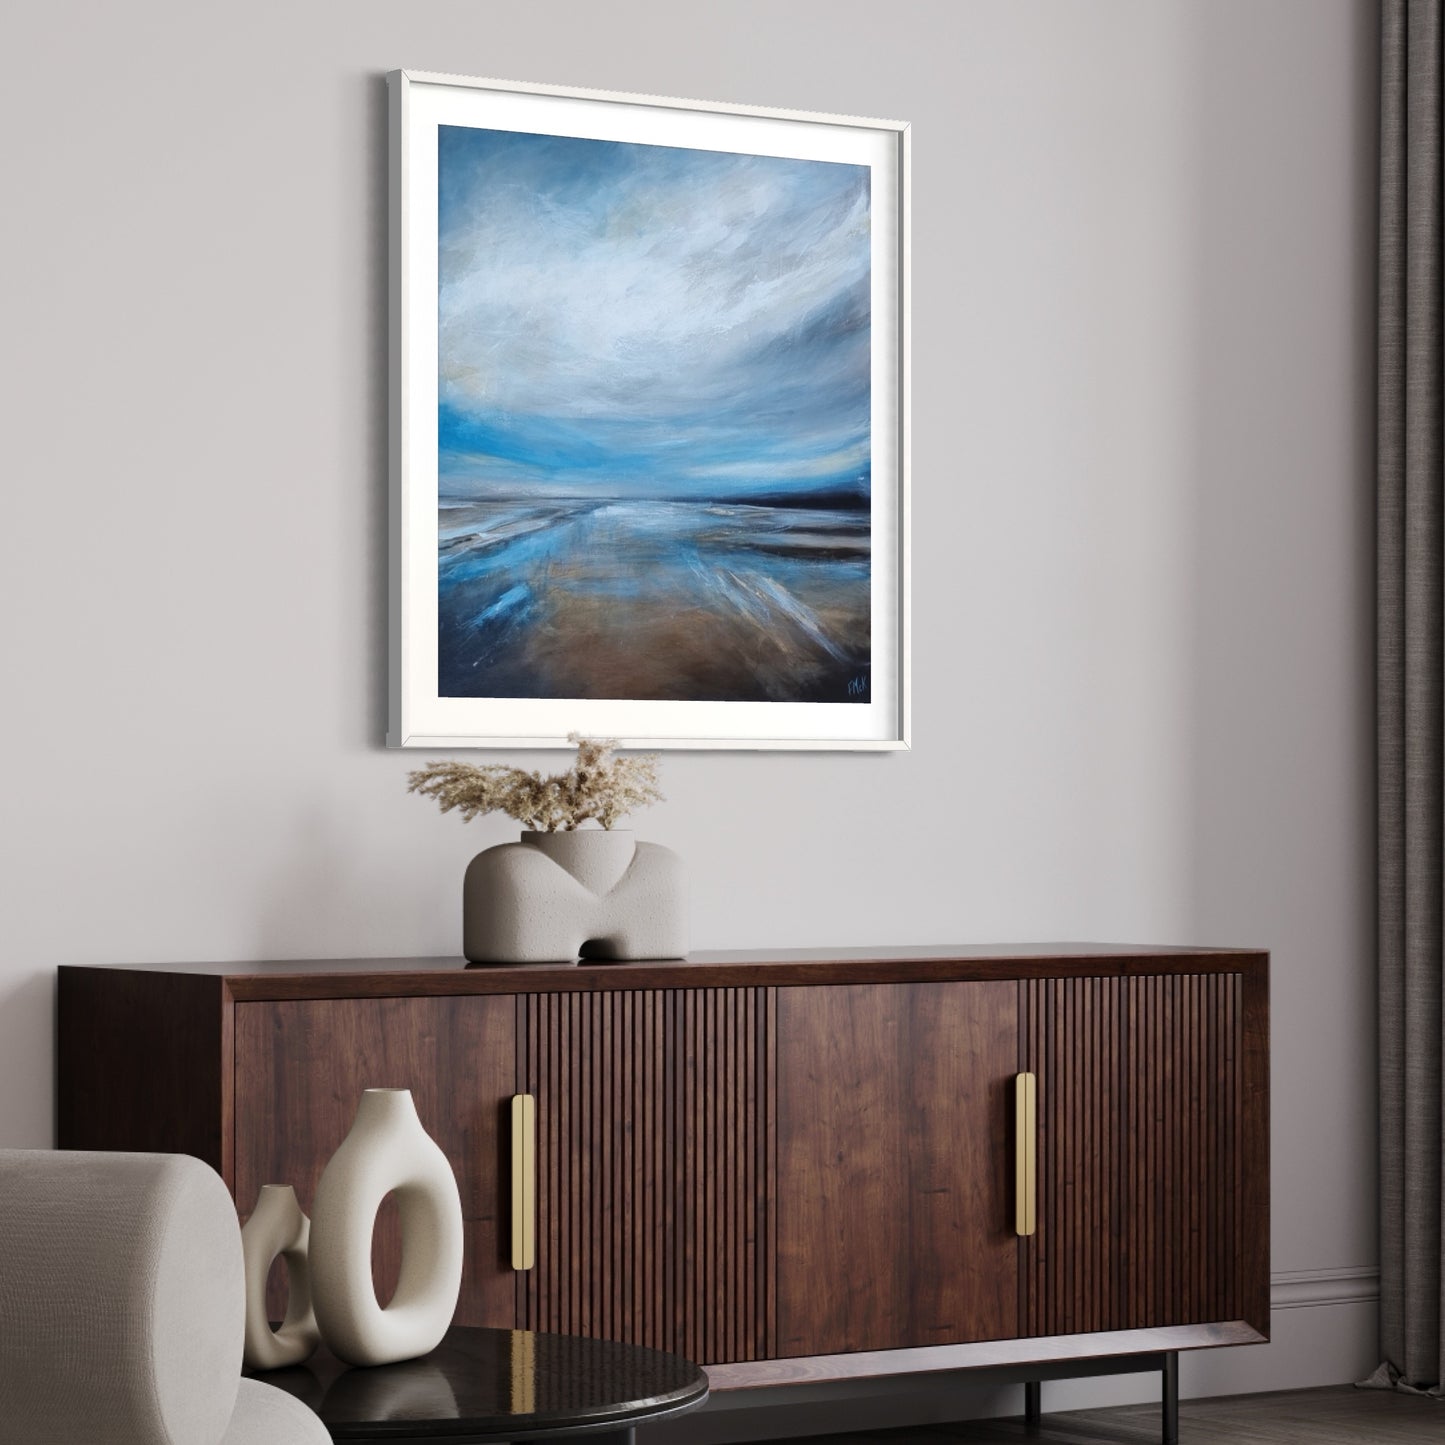 An original acrylic painting recalling a winter walk along the beach on the Wild Atlantic Way.